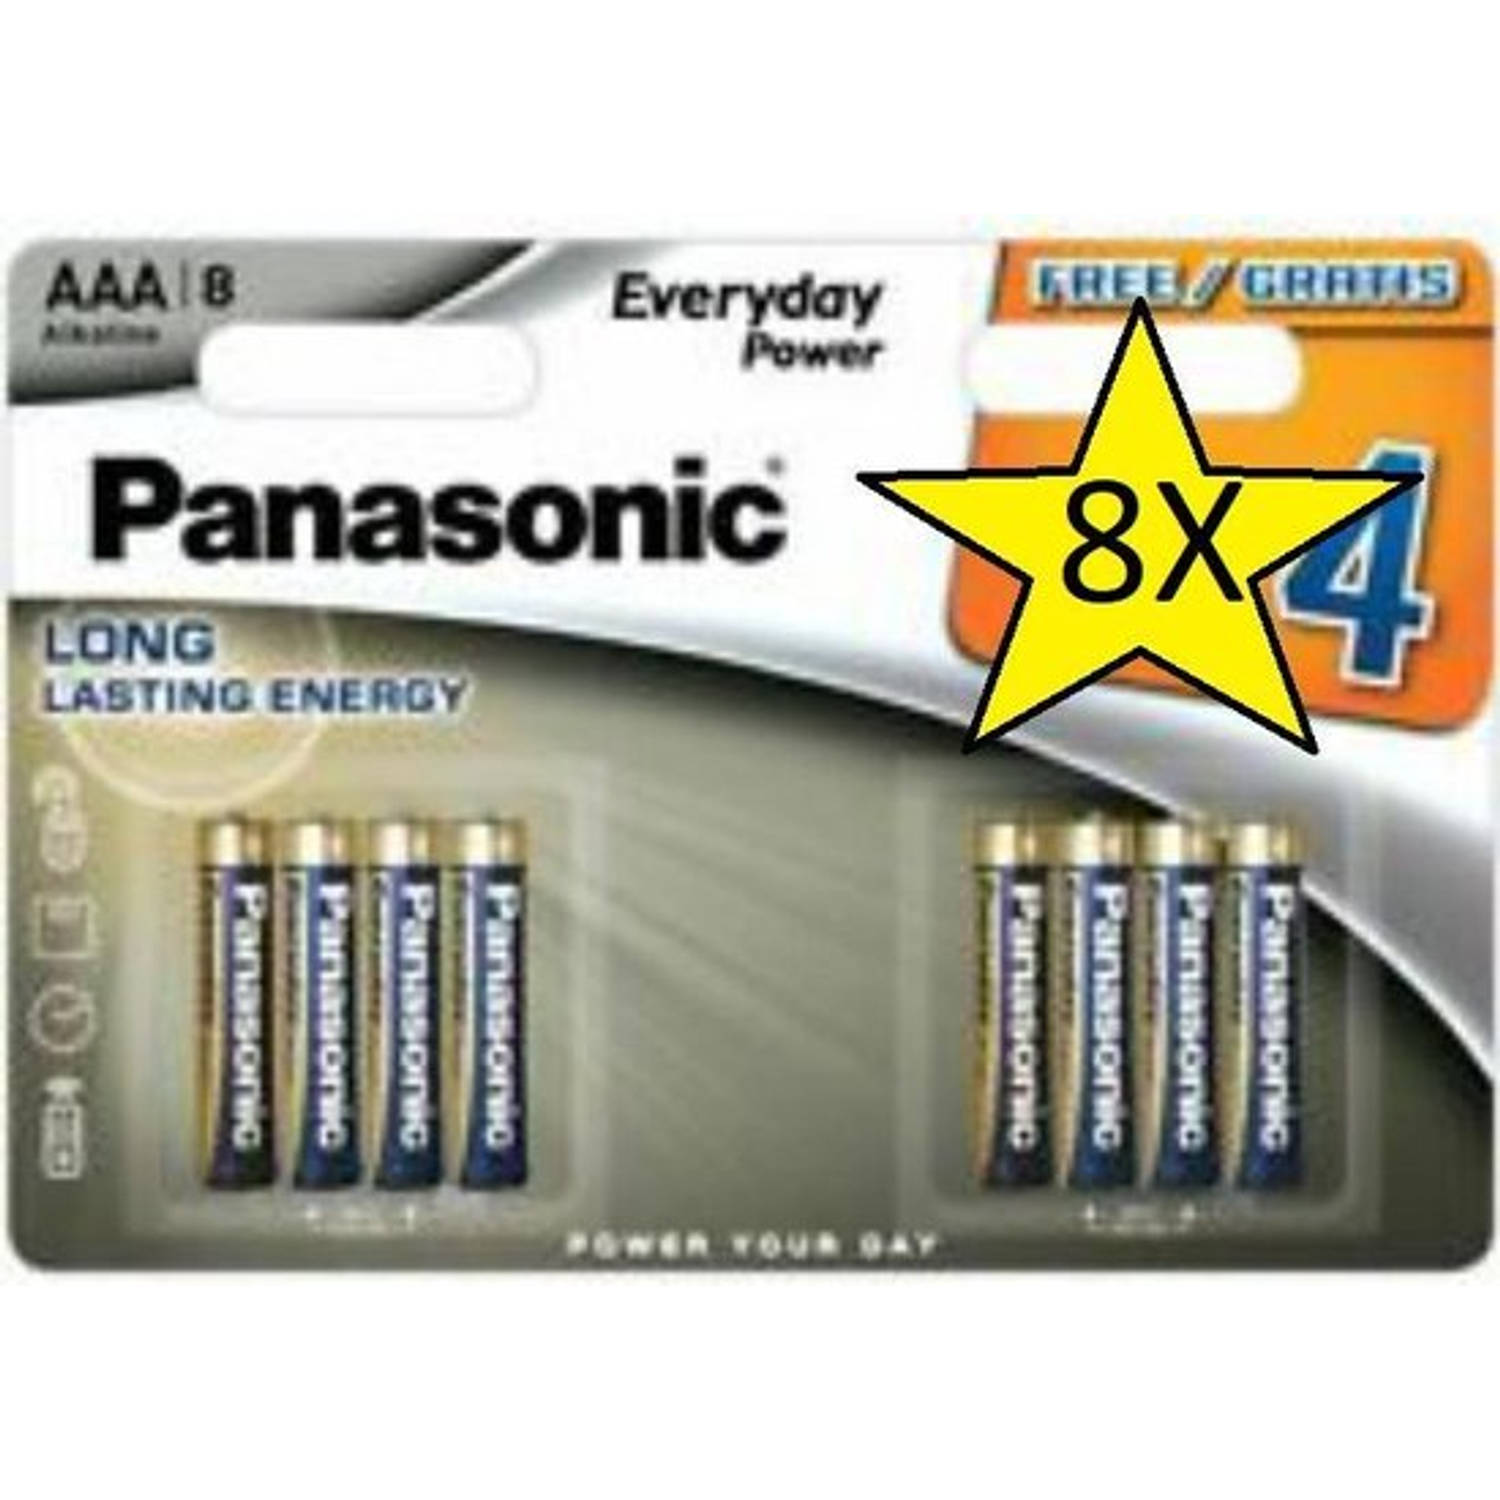 8 Blisters (64 batterijen) Panasonic Alkaline Everyday Power AAA